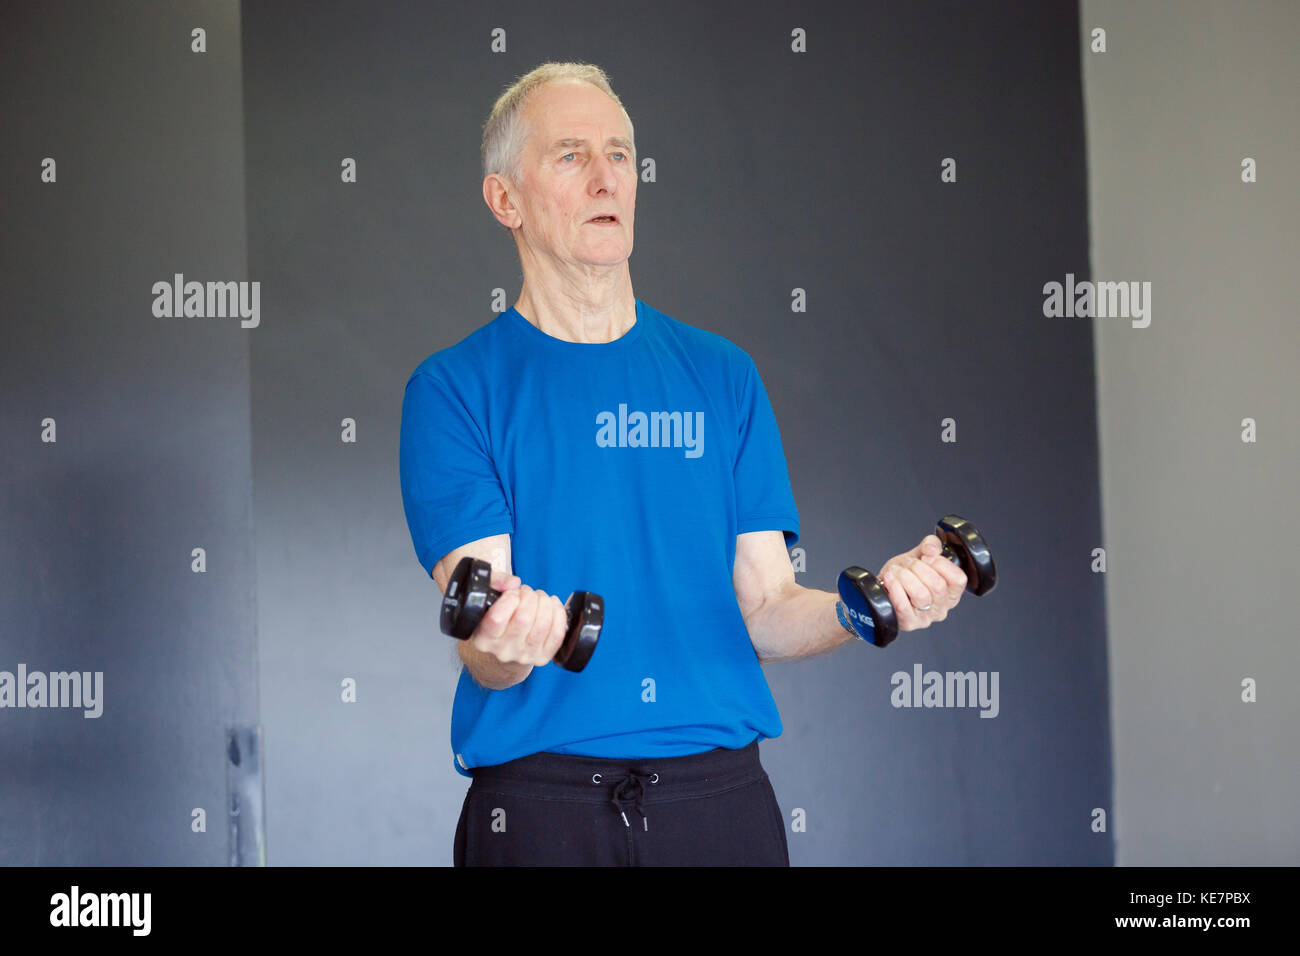 Ältere Männer Fitness Training Session Stockfoto